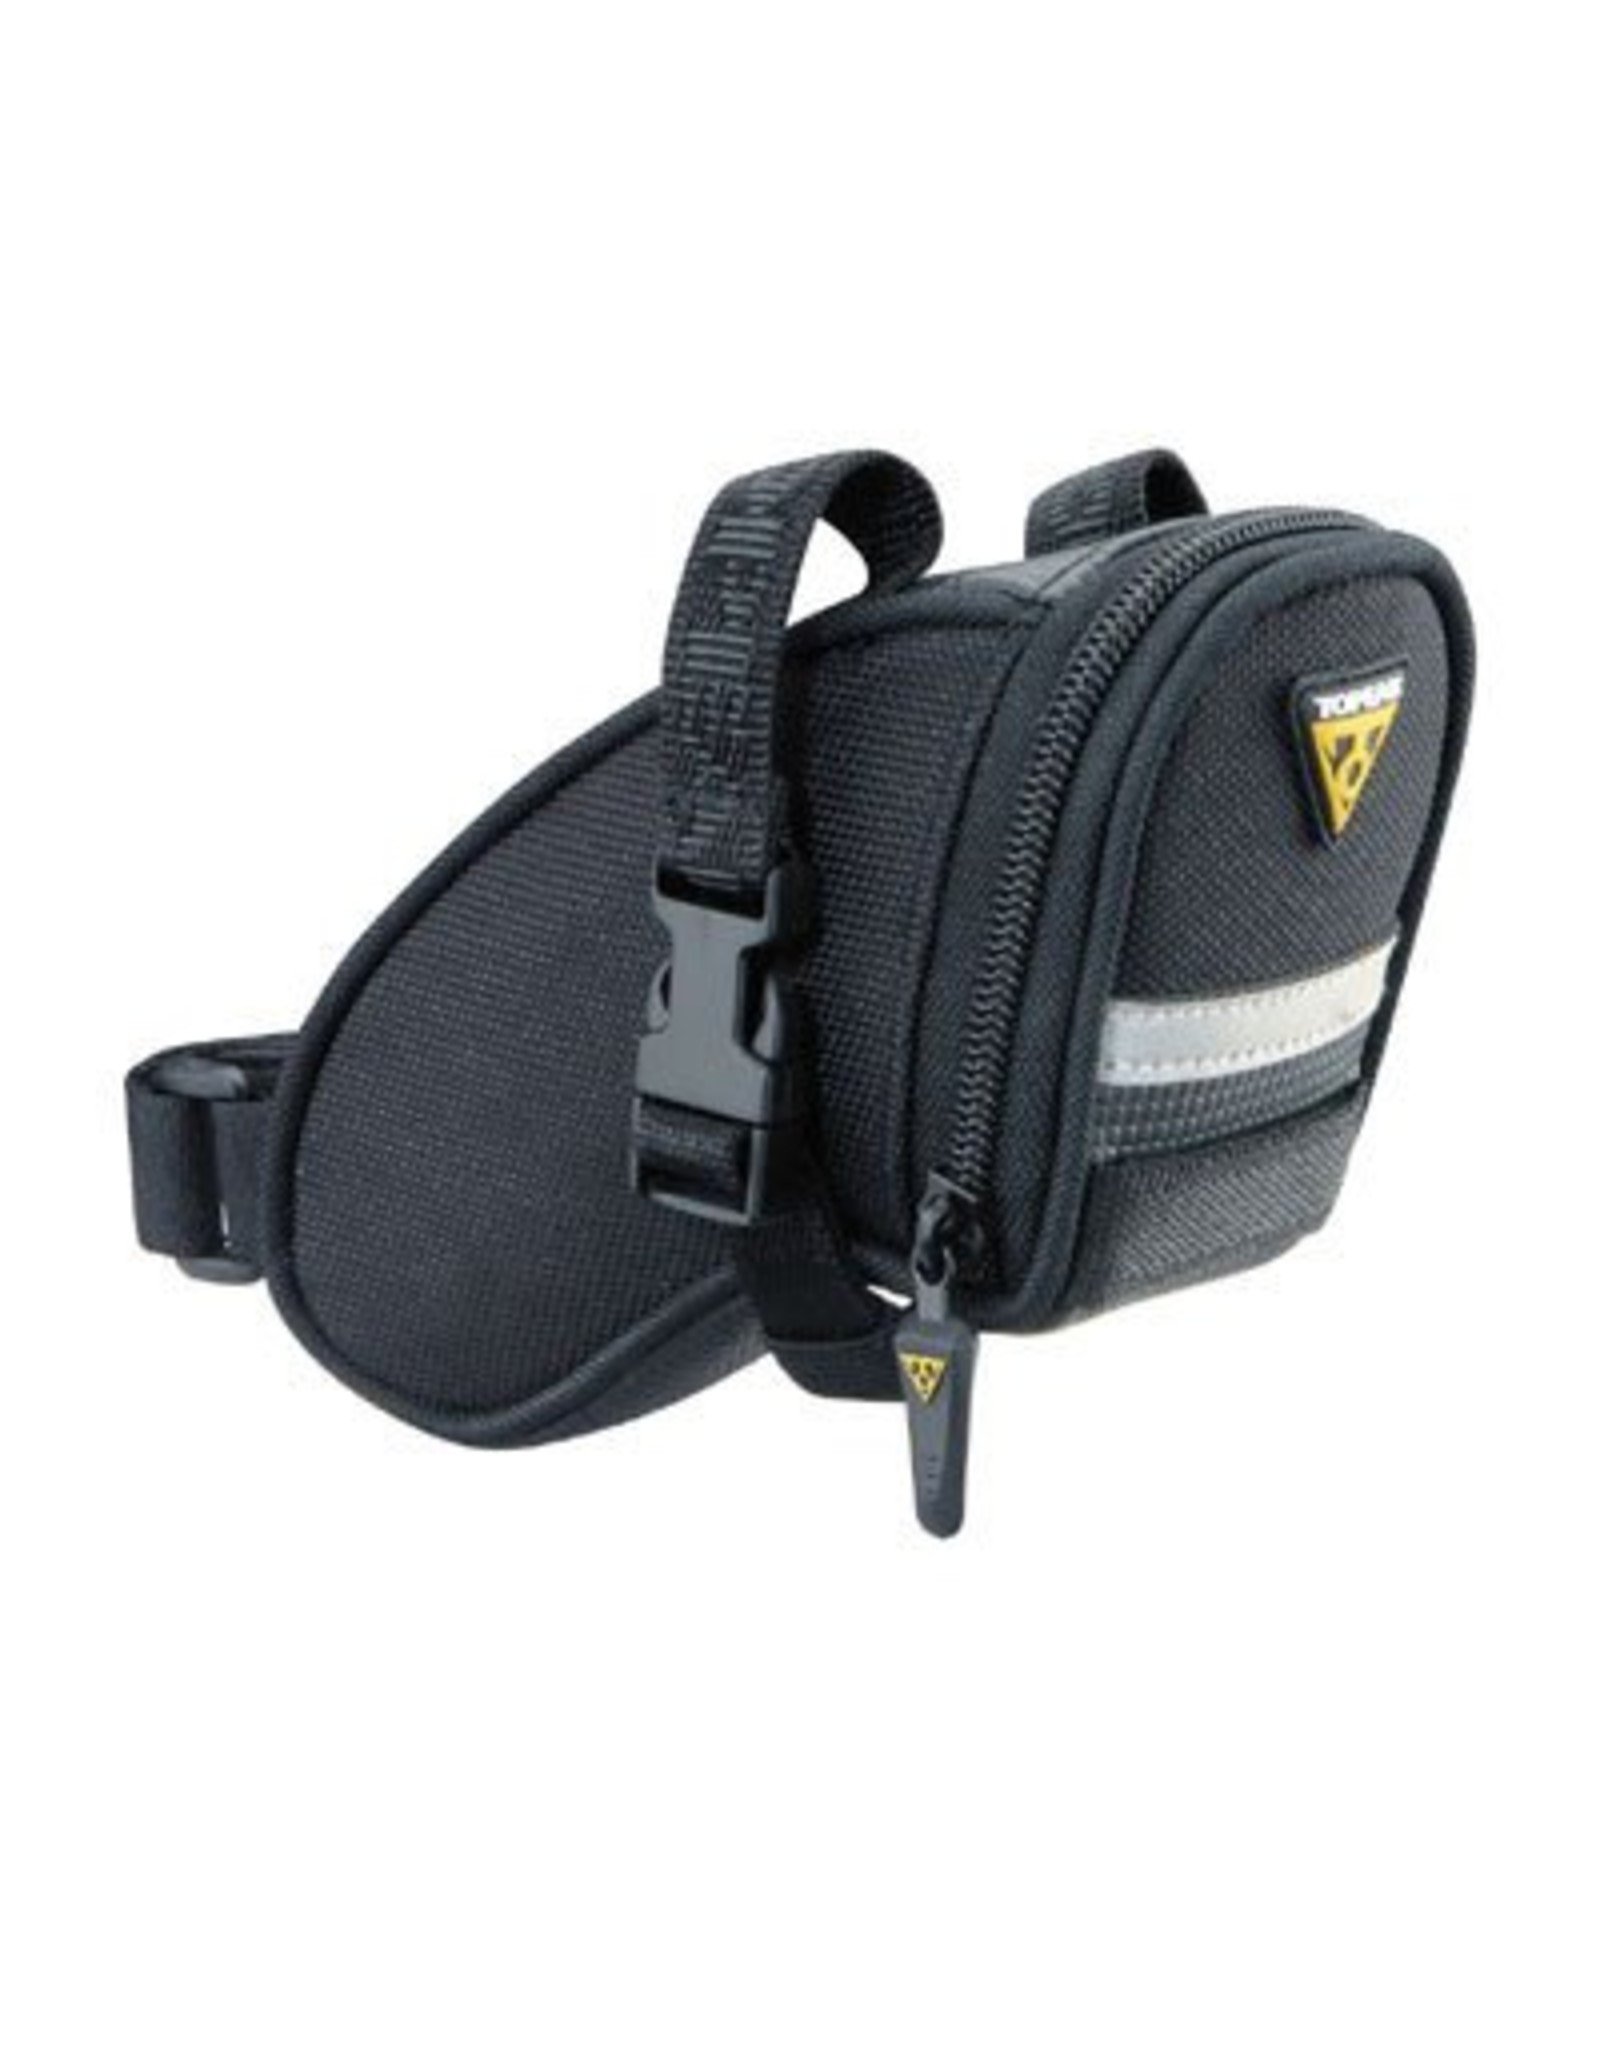 Topeak MICRO Bag Topeak WEDGE AERO  STRAP-ON Seat Bag